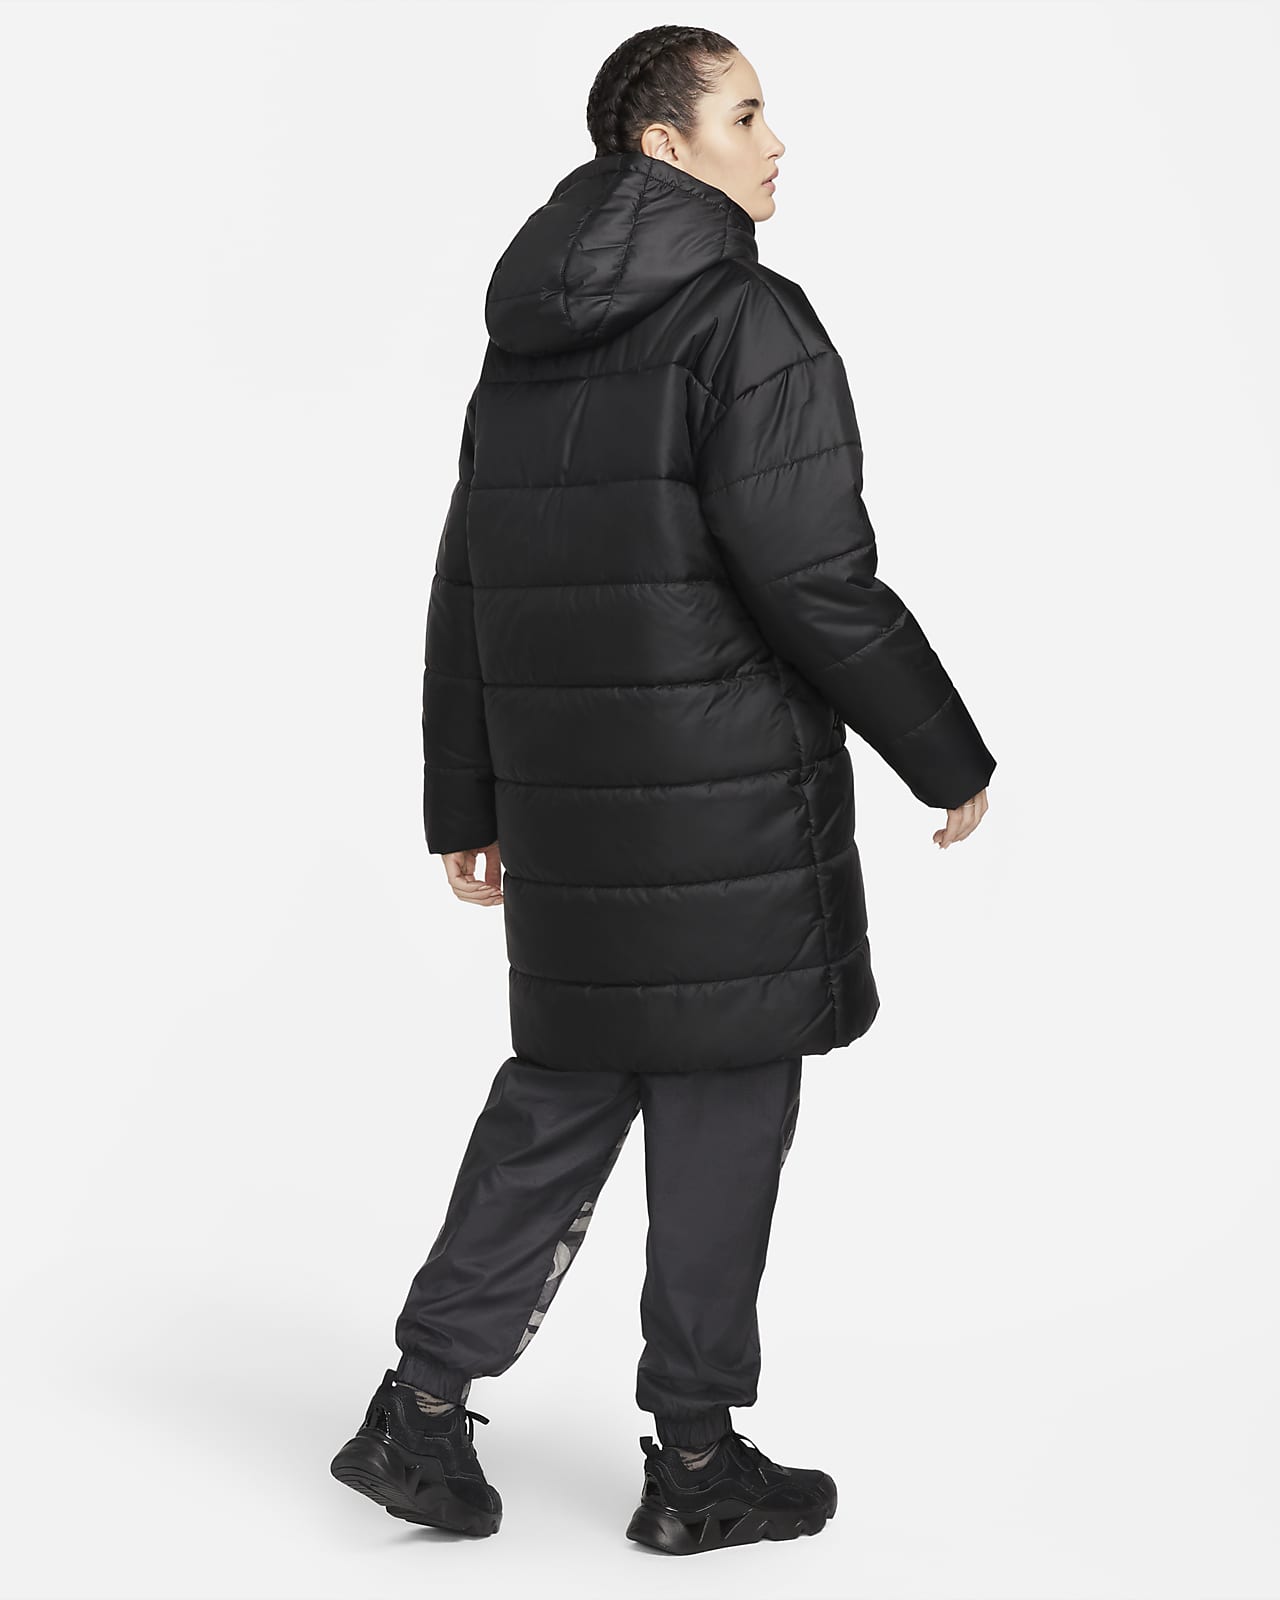 Nike Sportswear Therma-Fit Repel Puffer Jacket Black DD6978-010 s M